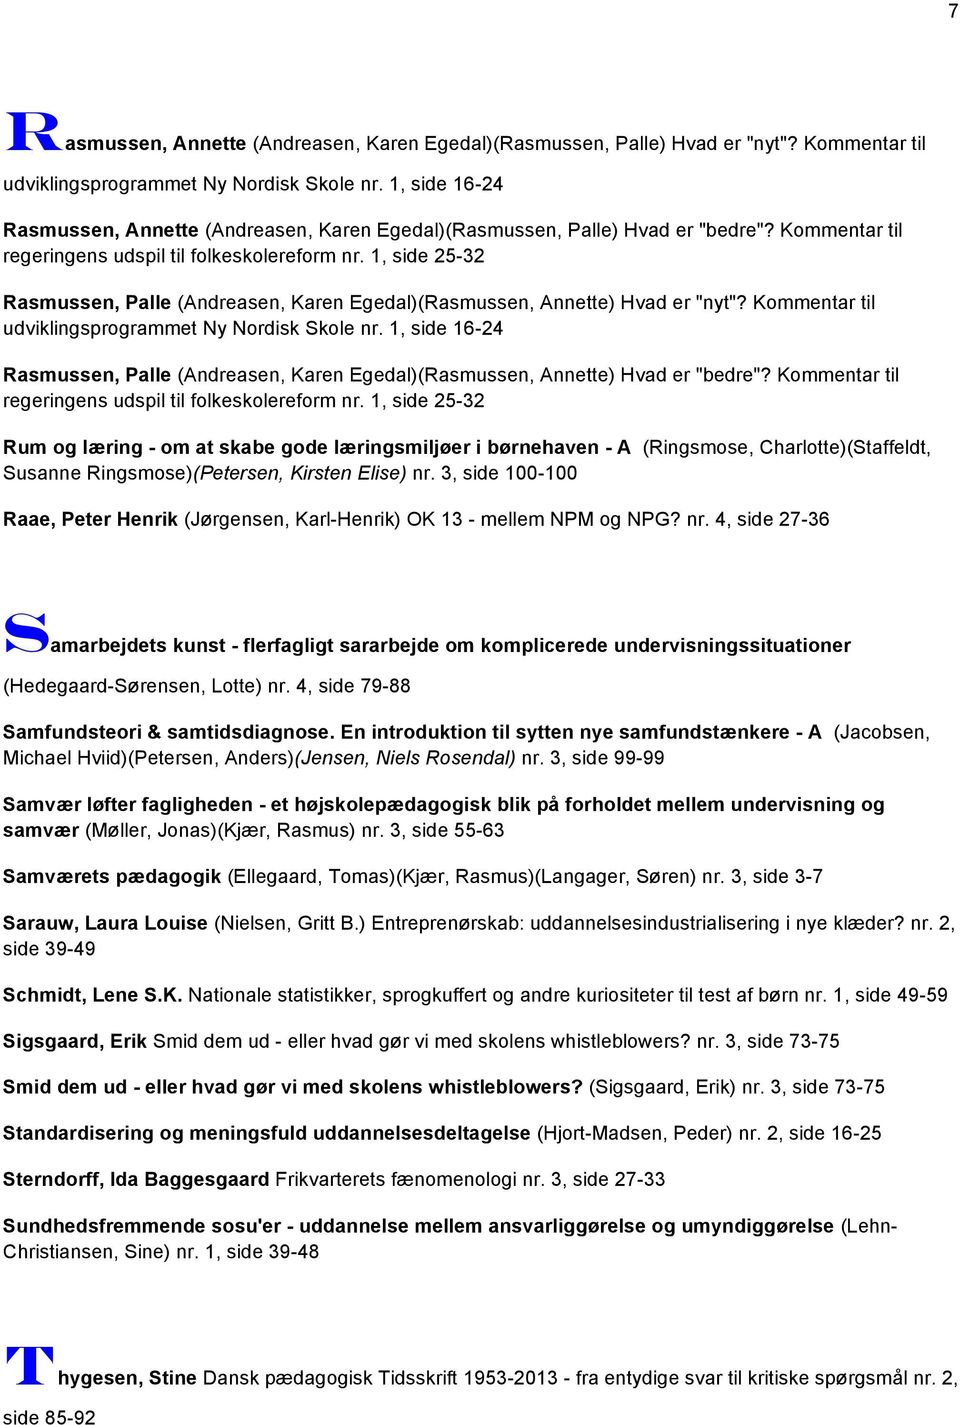 1, side 25-32 Rasmussen, Palle (Andreasen, Karen Egedal)(Rasmussen, Annette) Hvad er "nyt"? Kommentar til udviklingsprogrammet Ny Nordisk Skole nr.